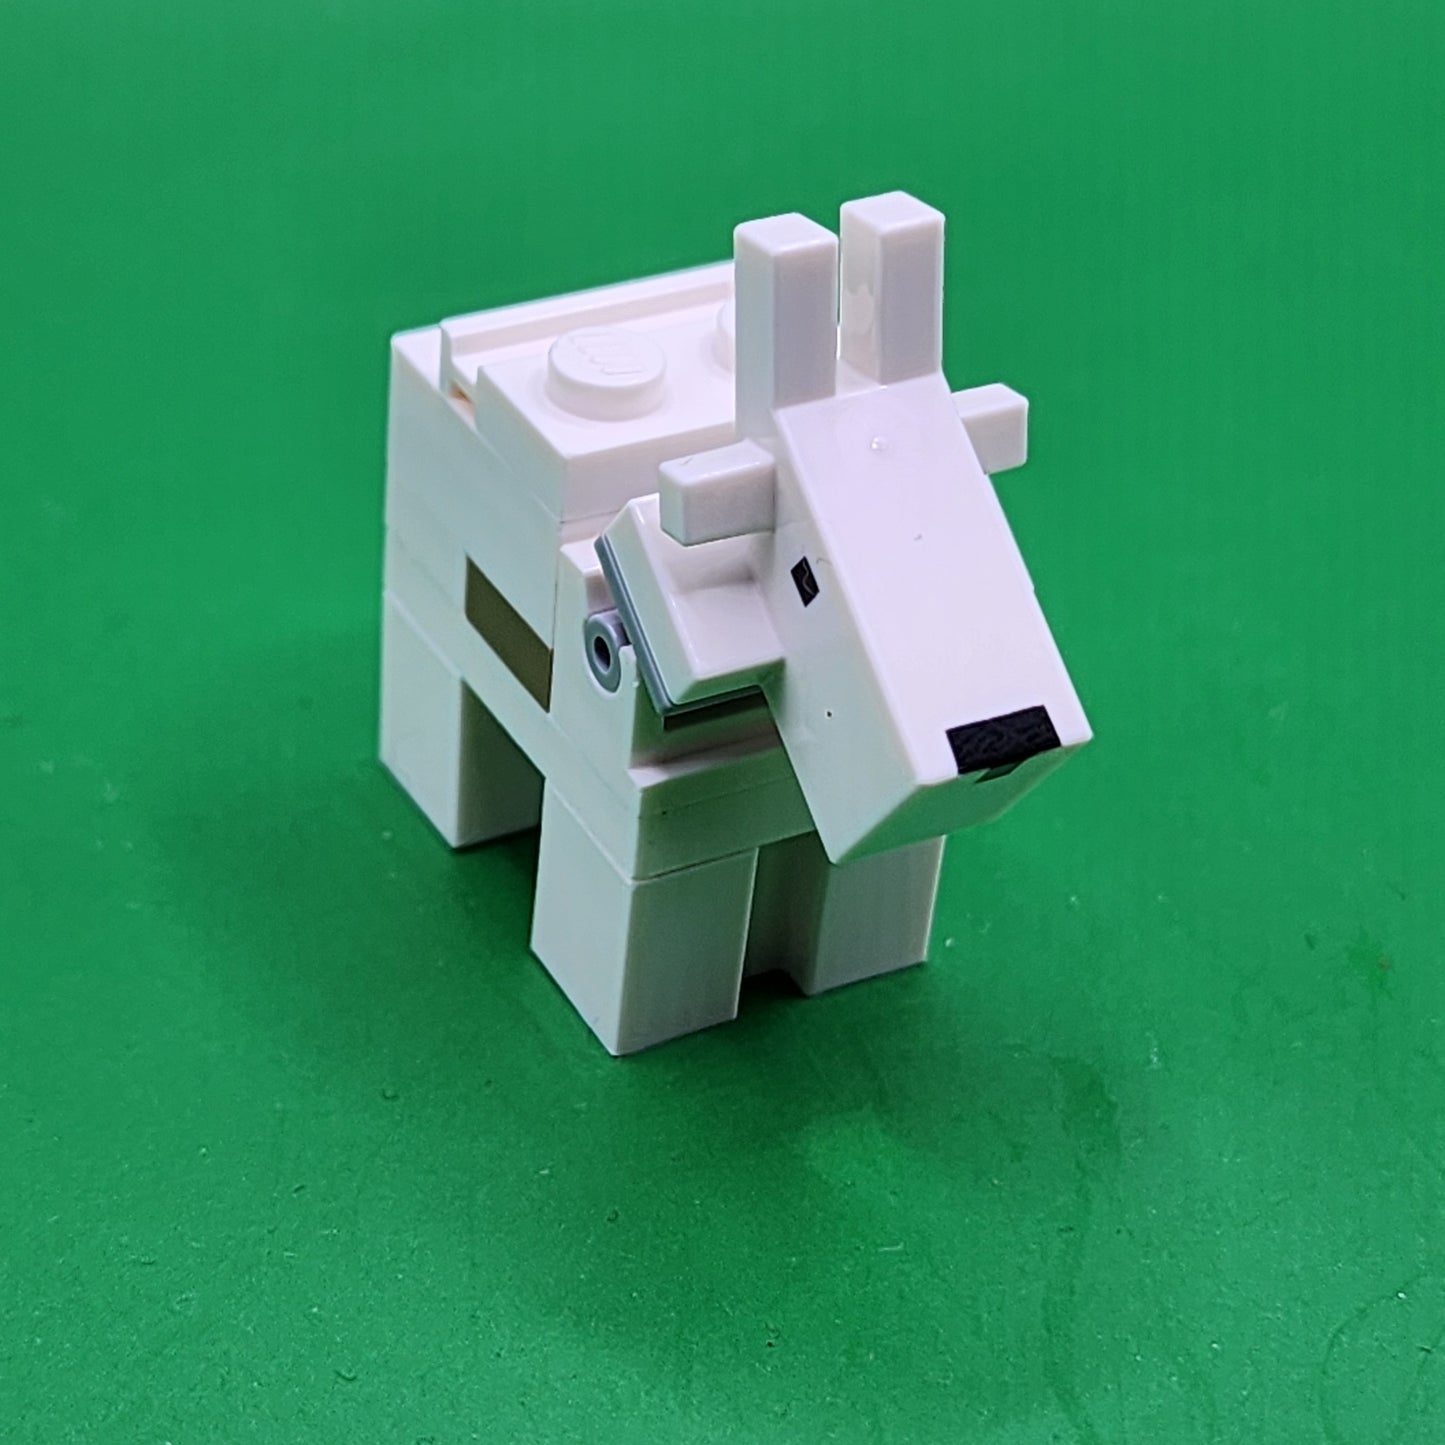 Lego Minecraft Goat Brick Built Minifigure Animal minegoat01